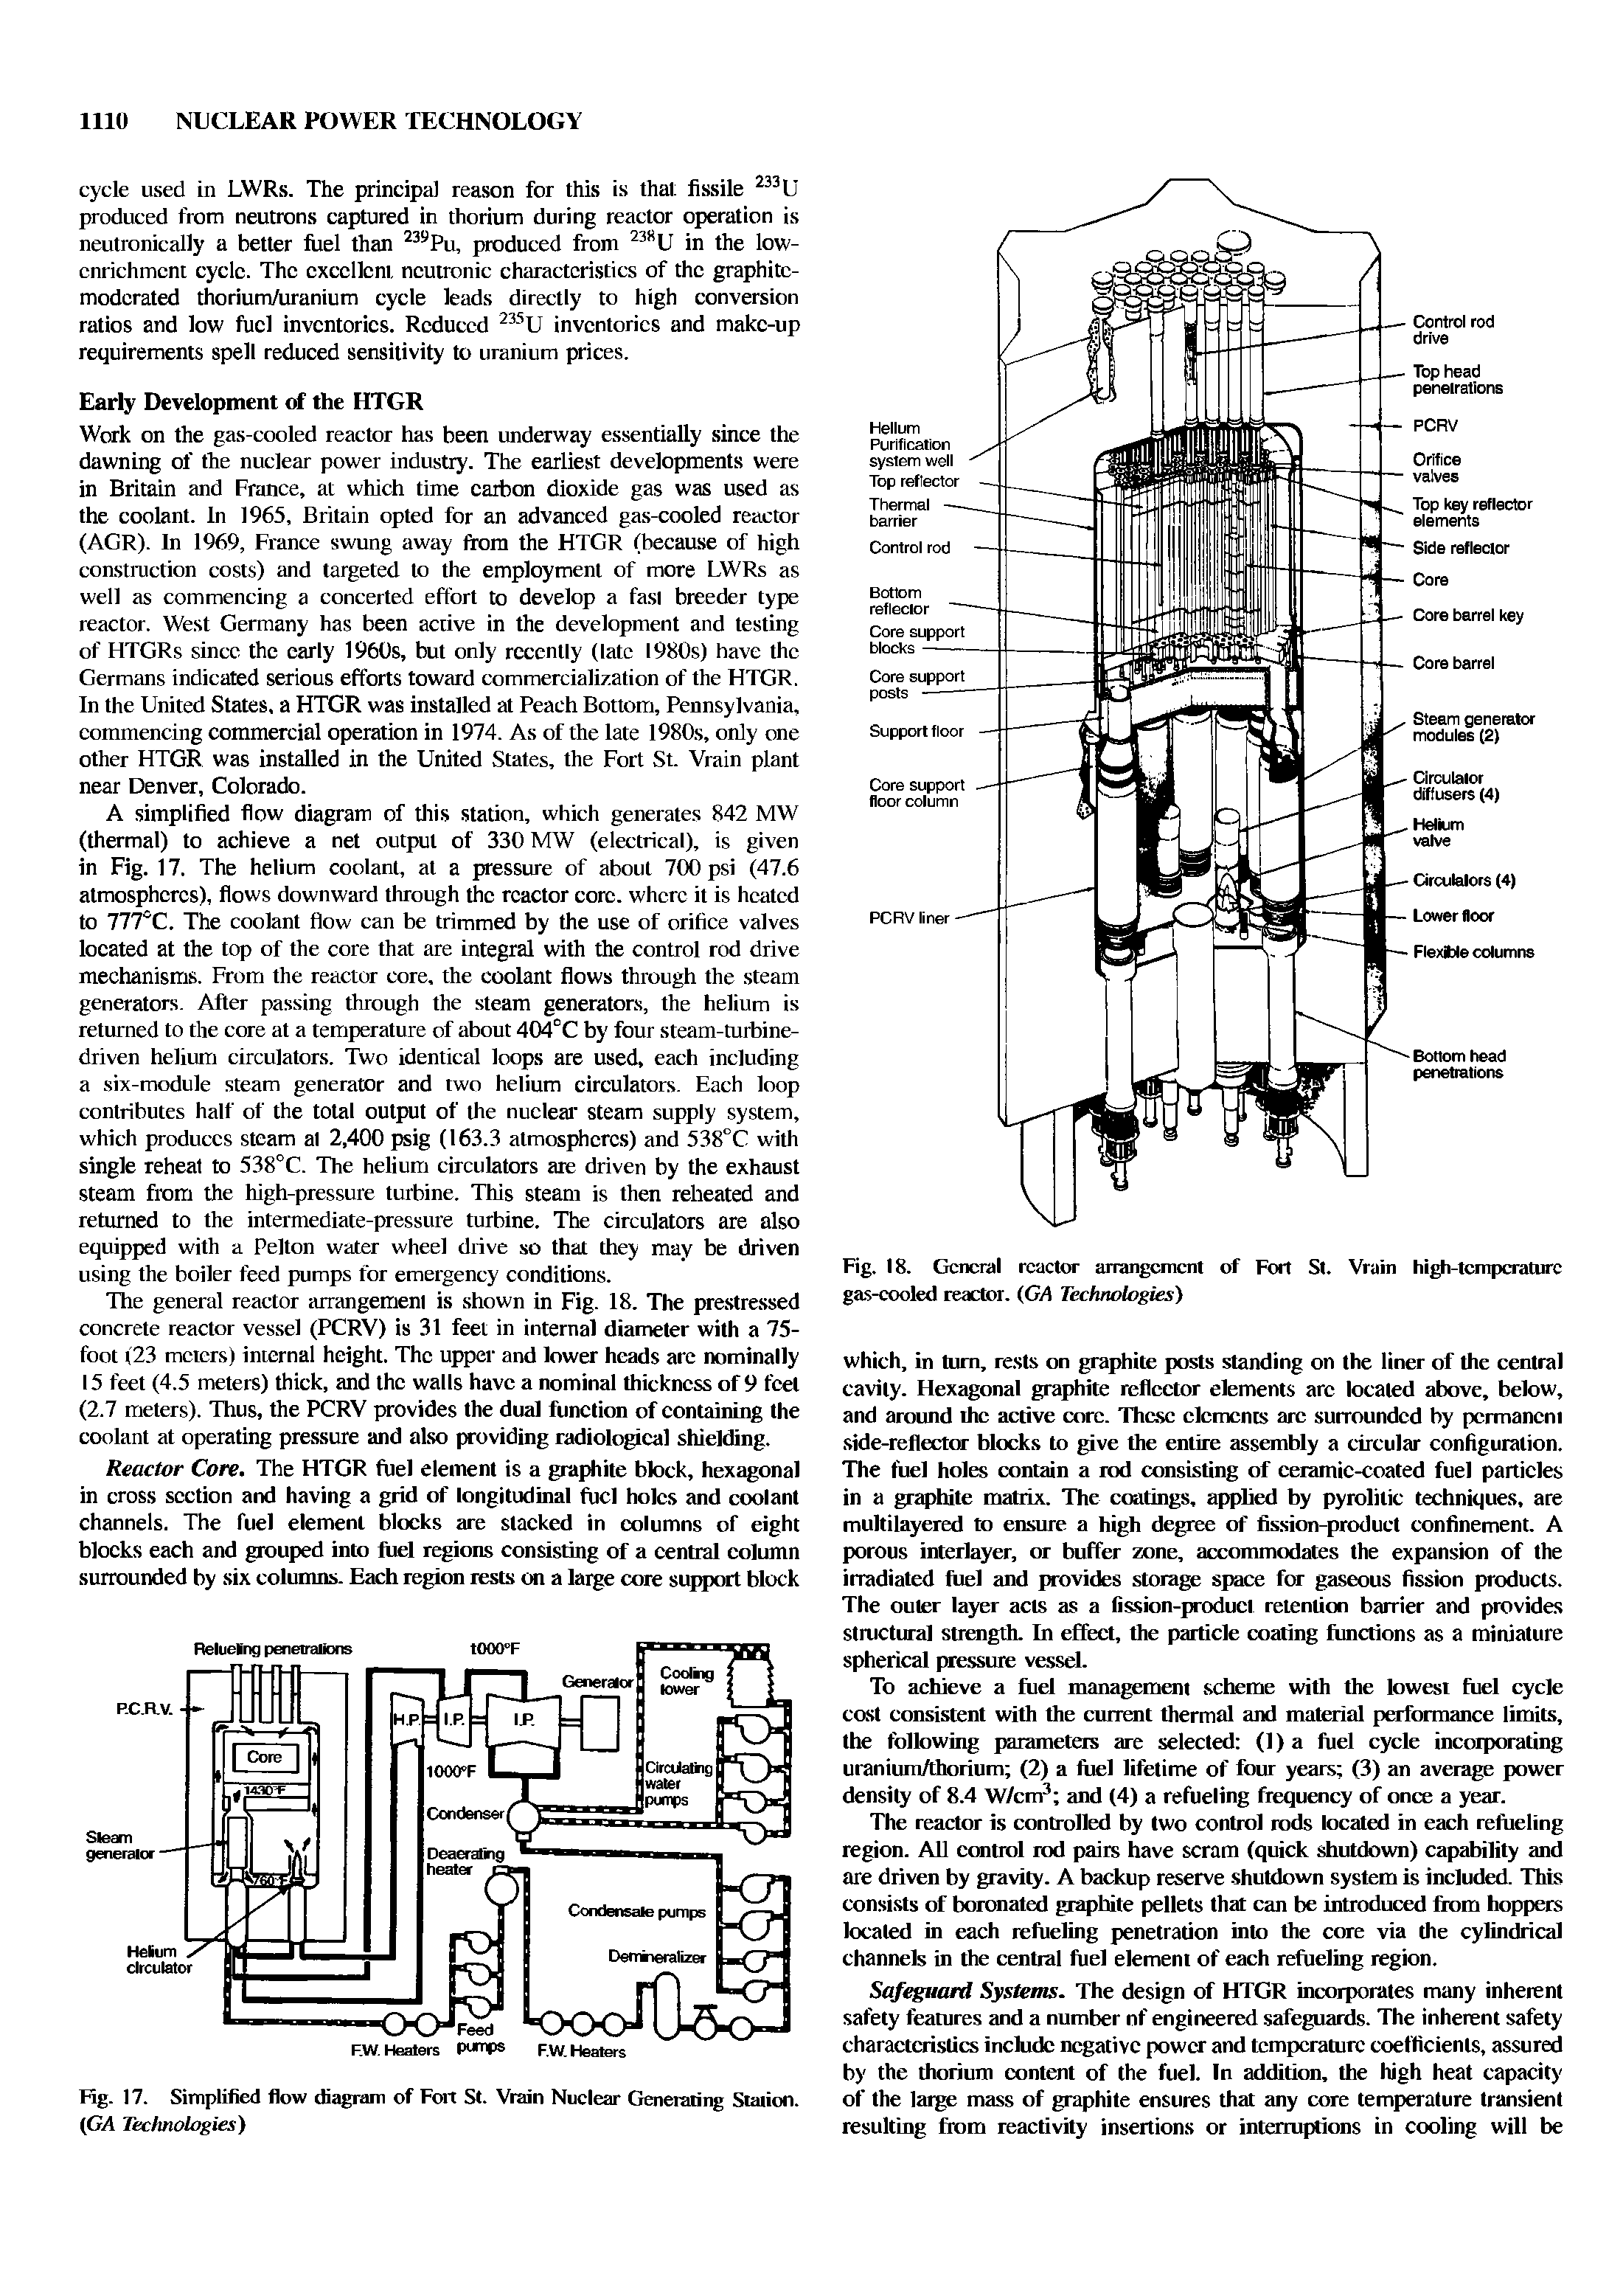 Fig. 18. General reactor arrangement of Fort St. Vrain high-temperature gas-cooled reactor. (GA Technologies)...